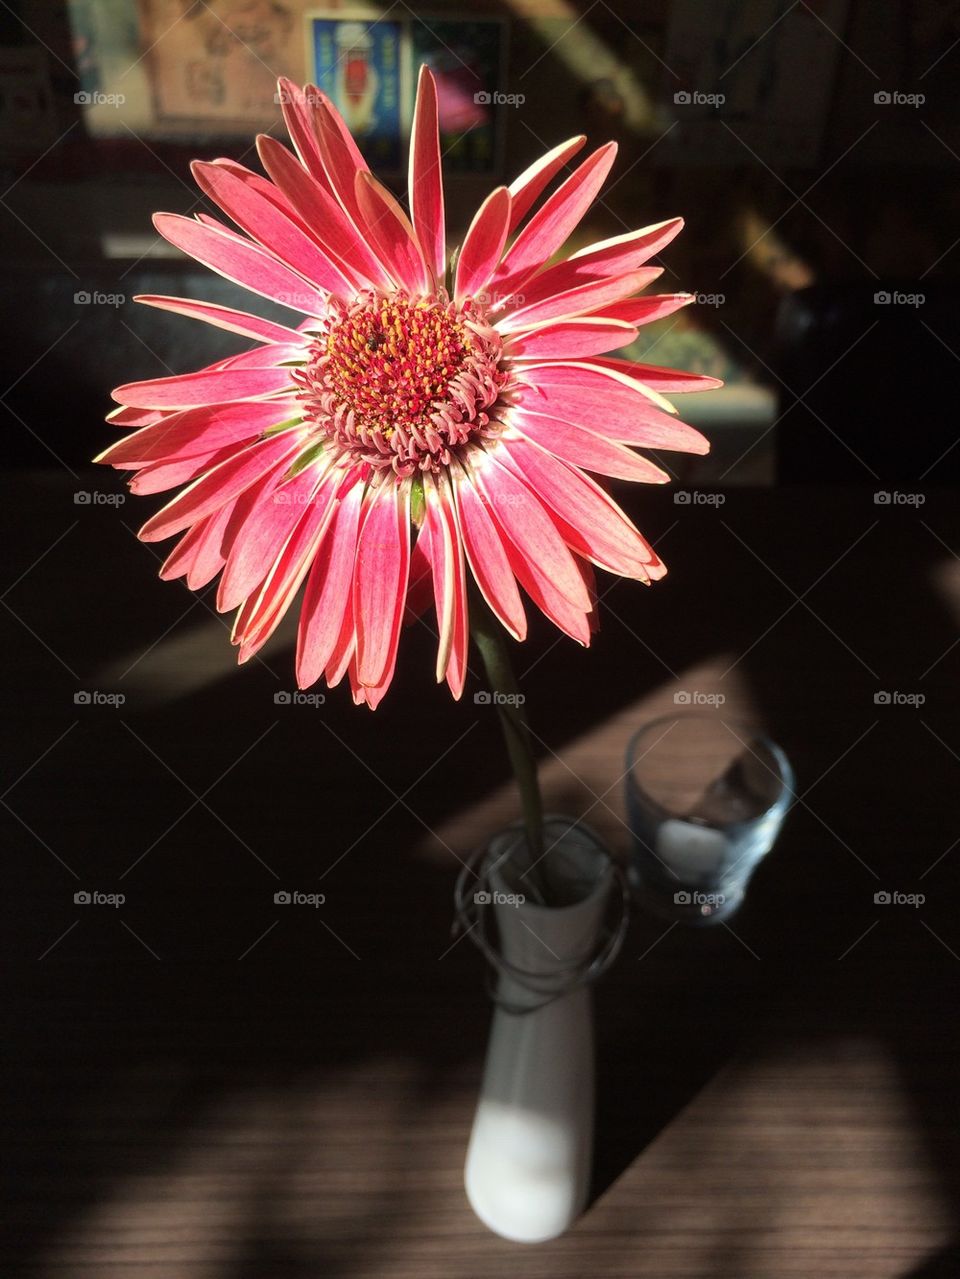 Flower On table